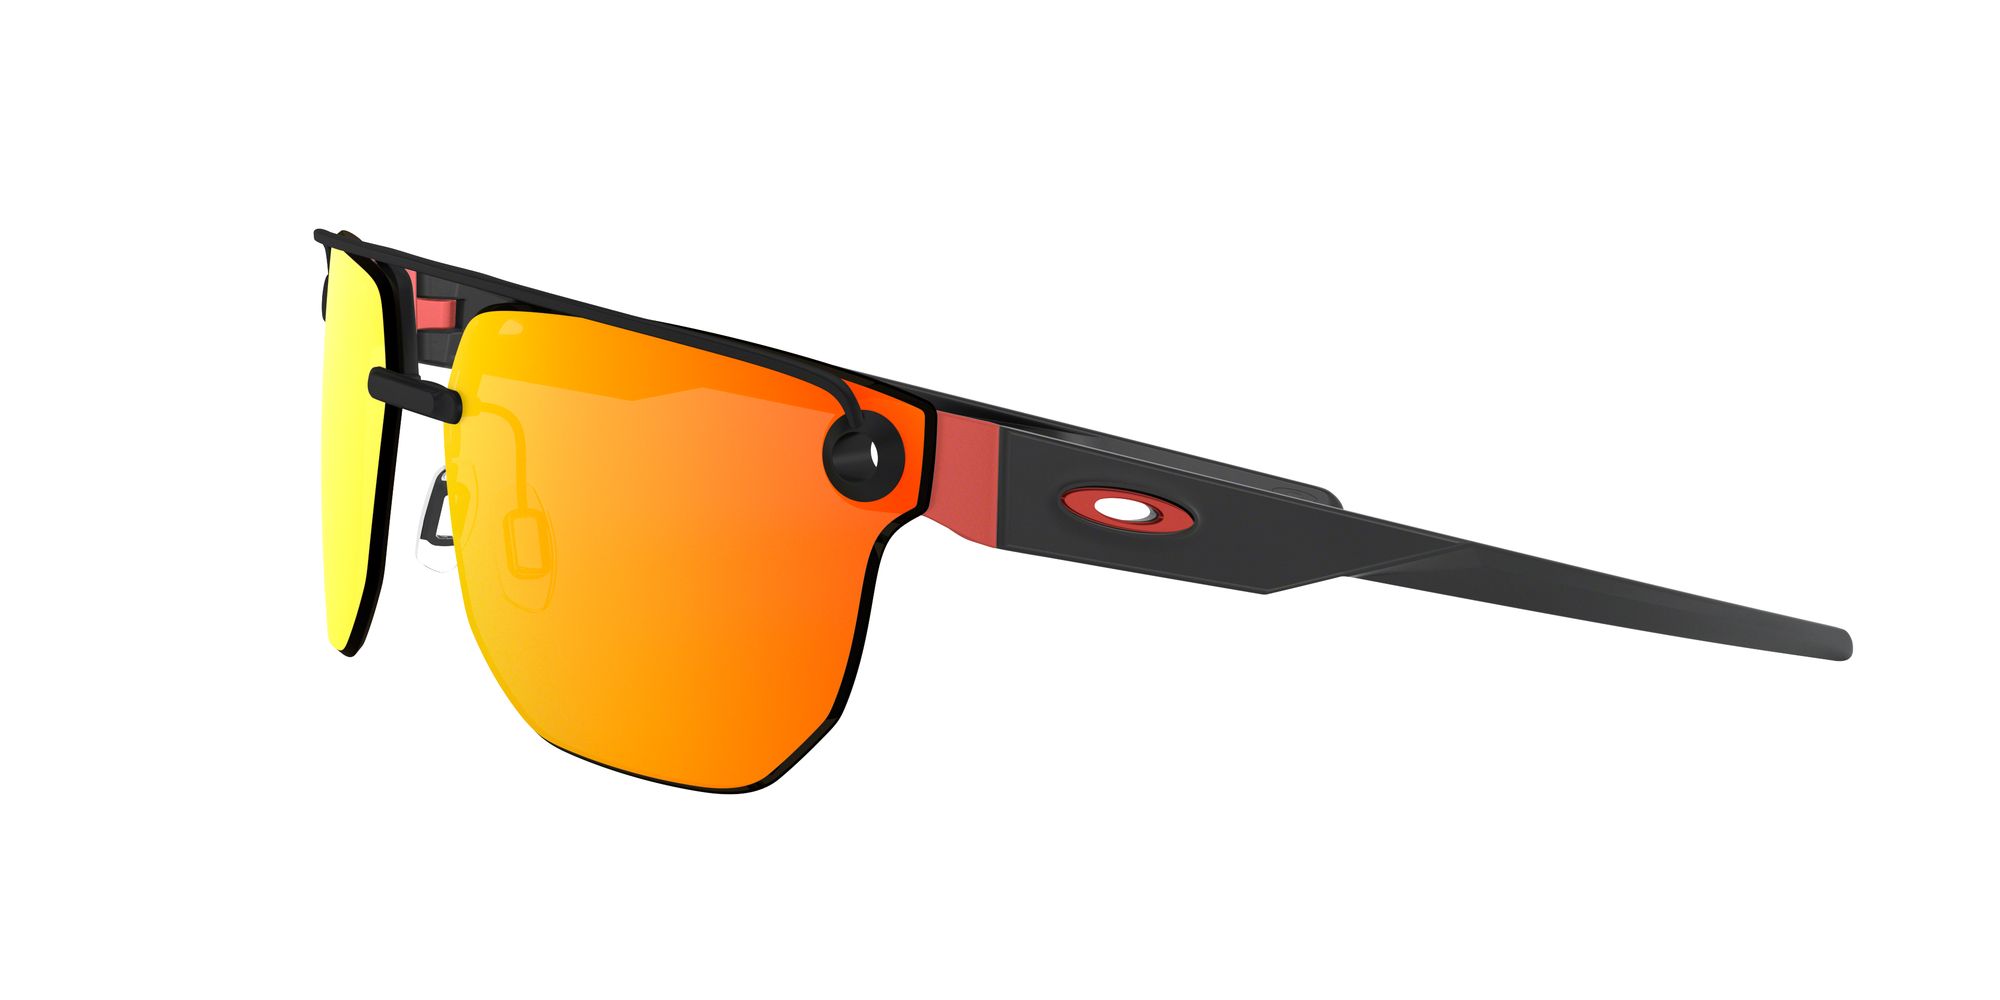 Oakley OO4136 Men's Chrystl Prizm Square Sunglasses, Black/Mirror Orange